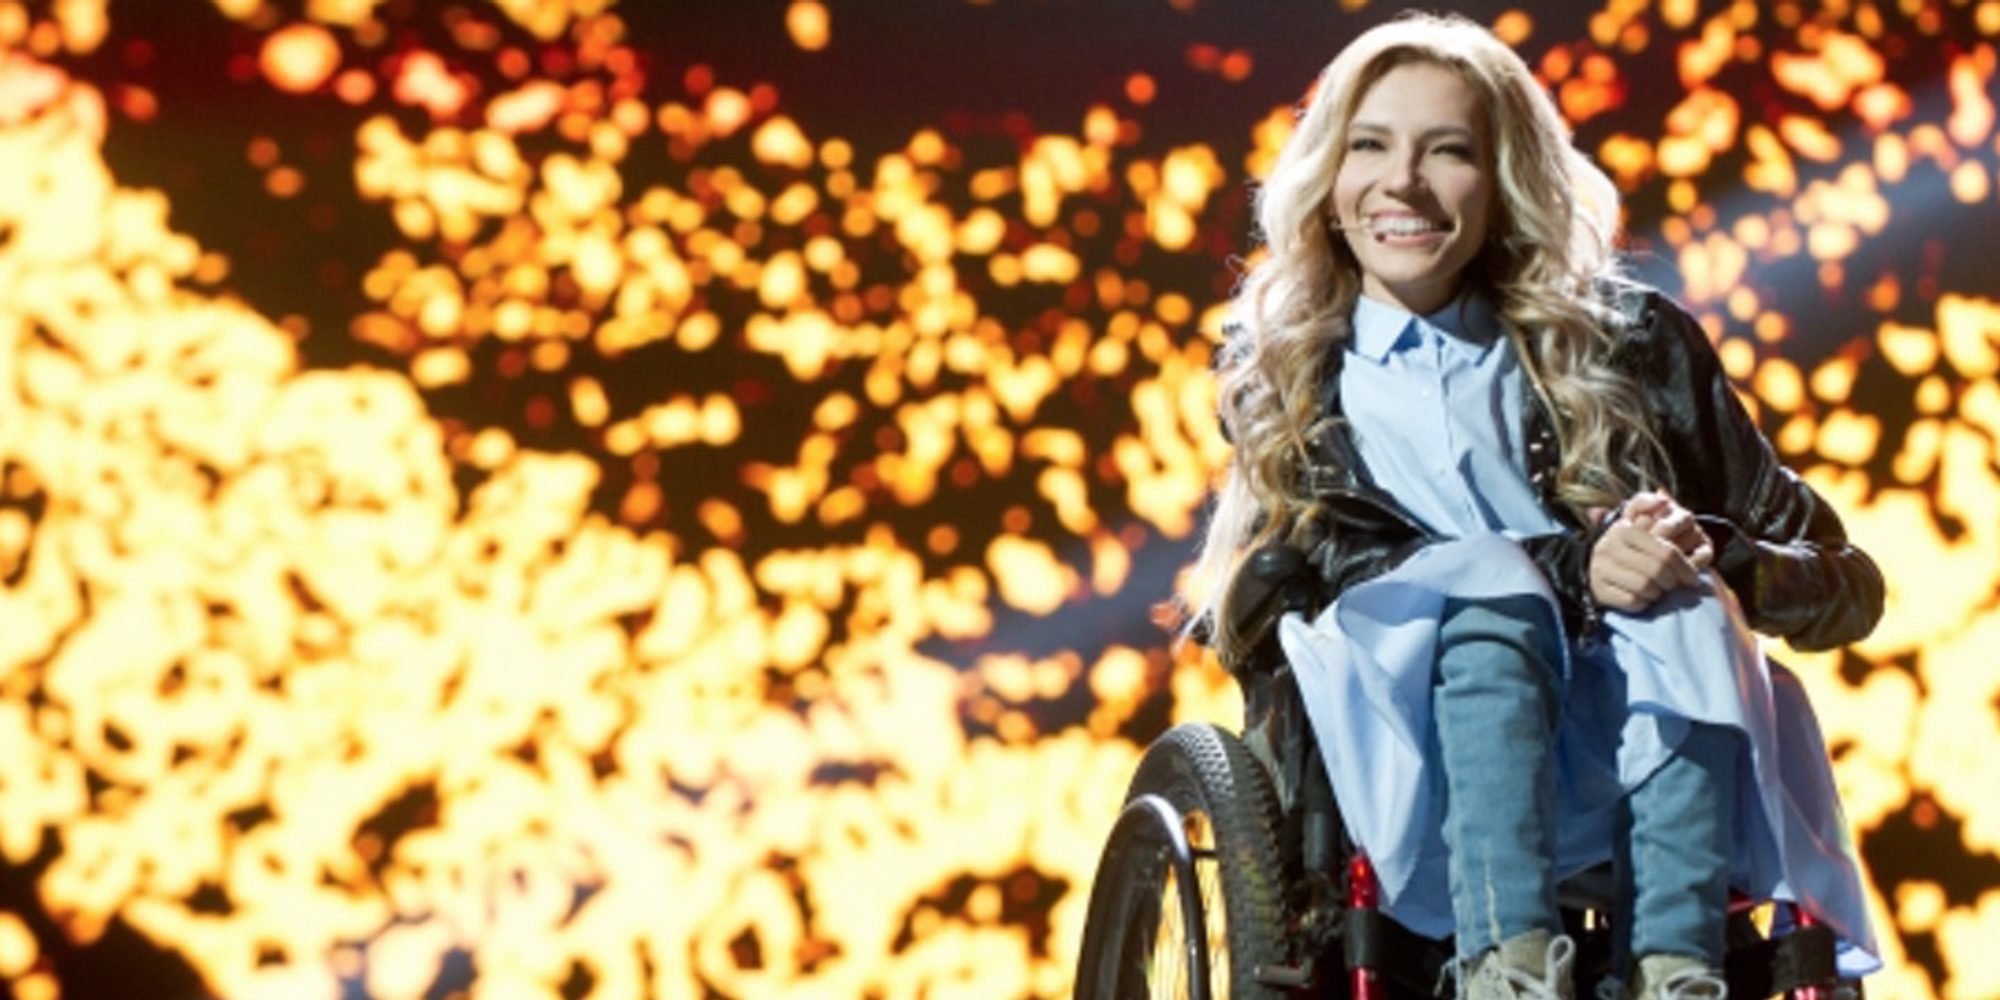 Rusia se retira de Eurovisión 2017 tras el veto de Ucrania a su representante Yulia Samoylova